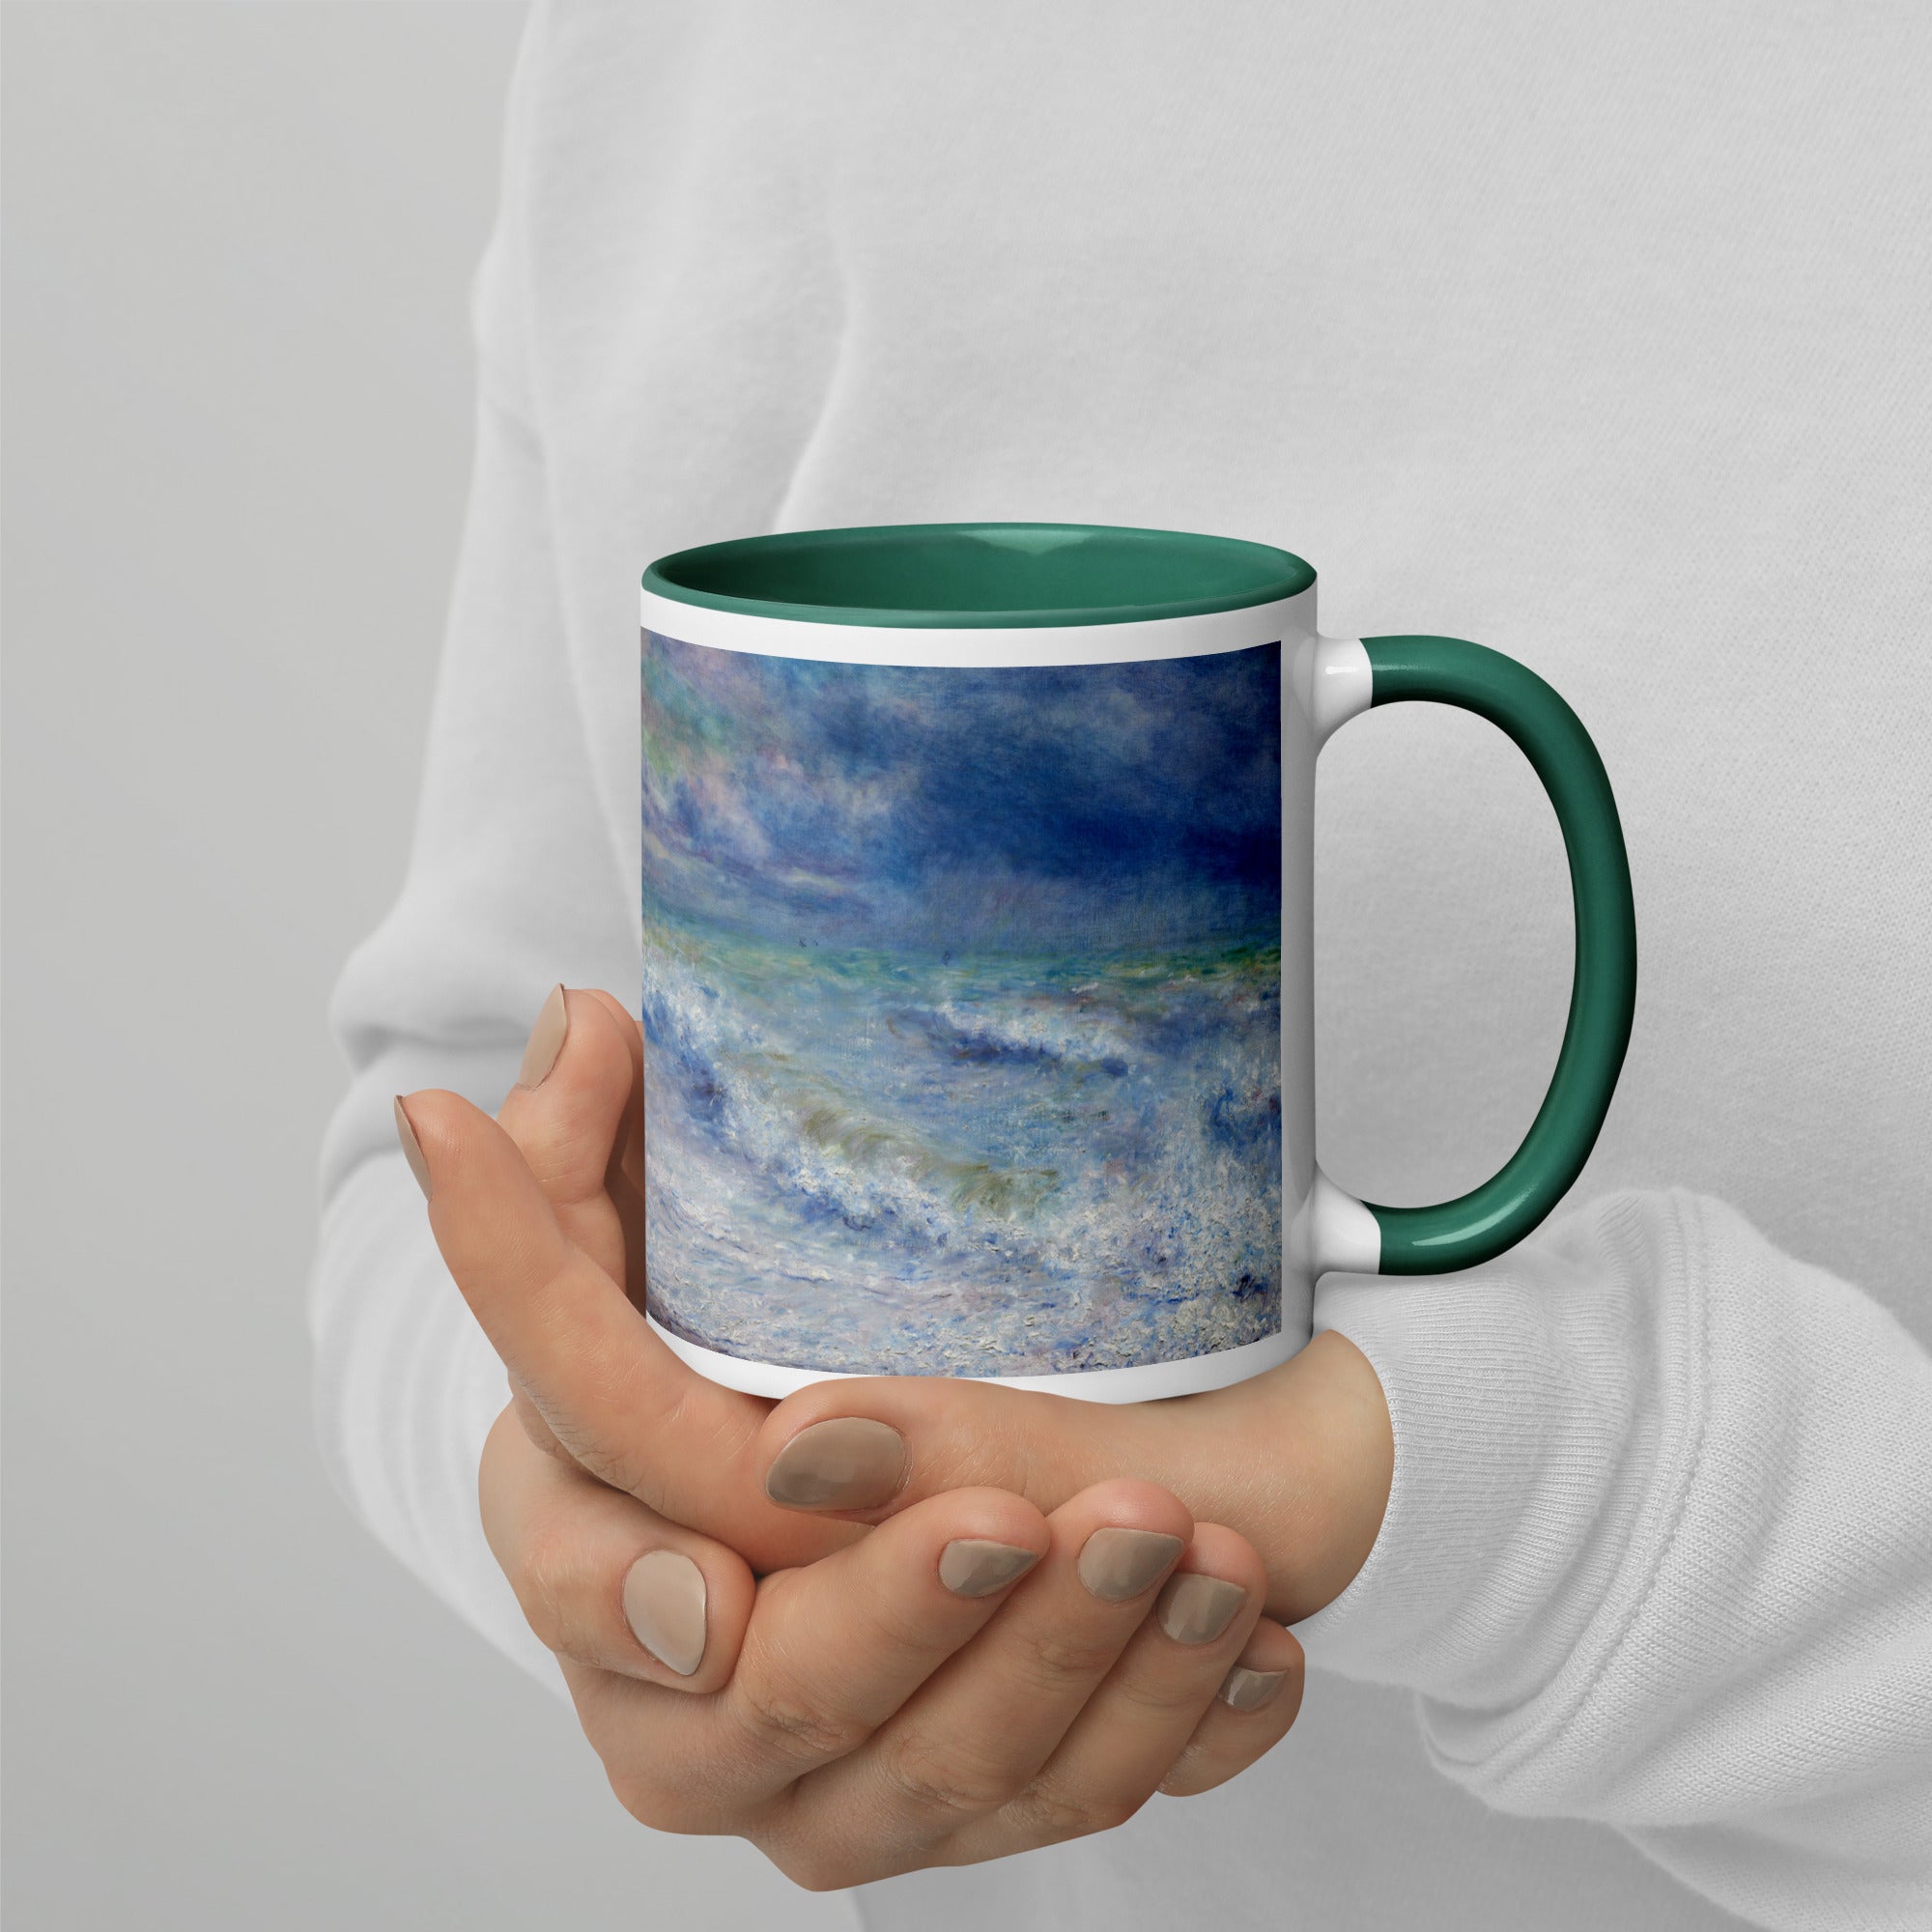 Pierre-Auguste Renoir 'Seascape' Famous Painting Ceramic Mug | Premium Art Mug